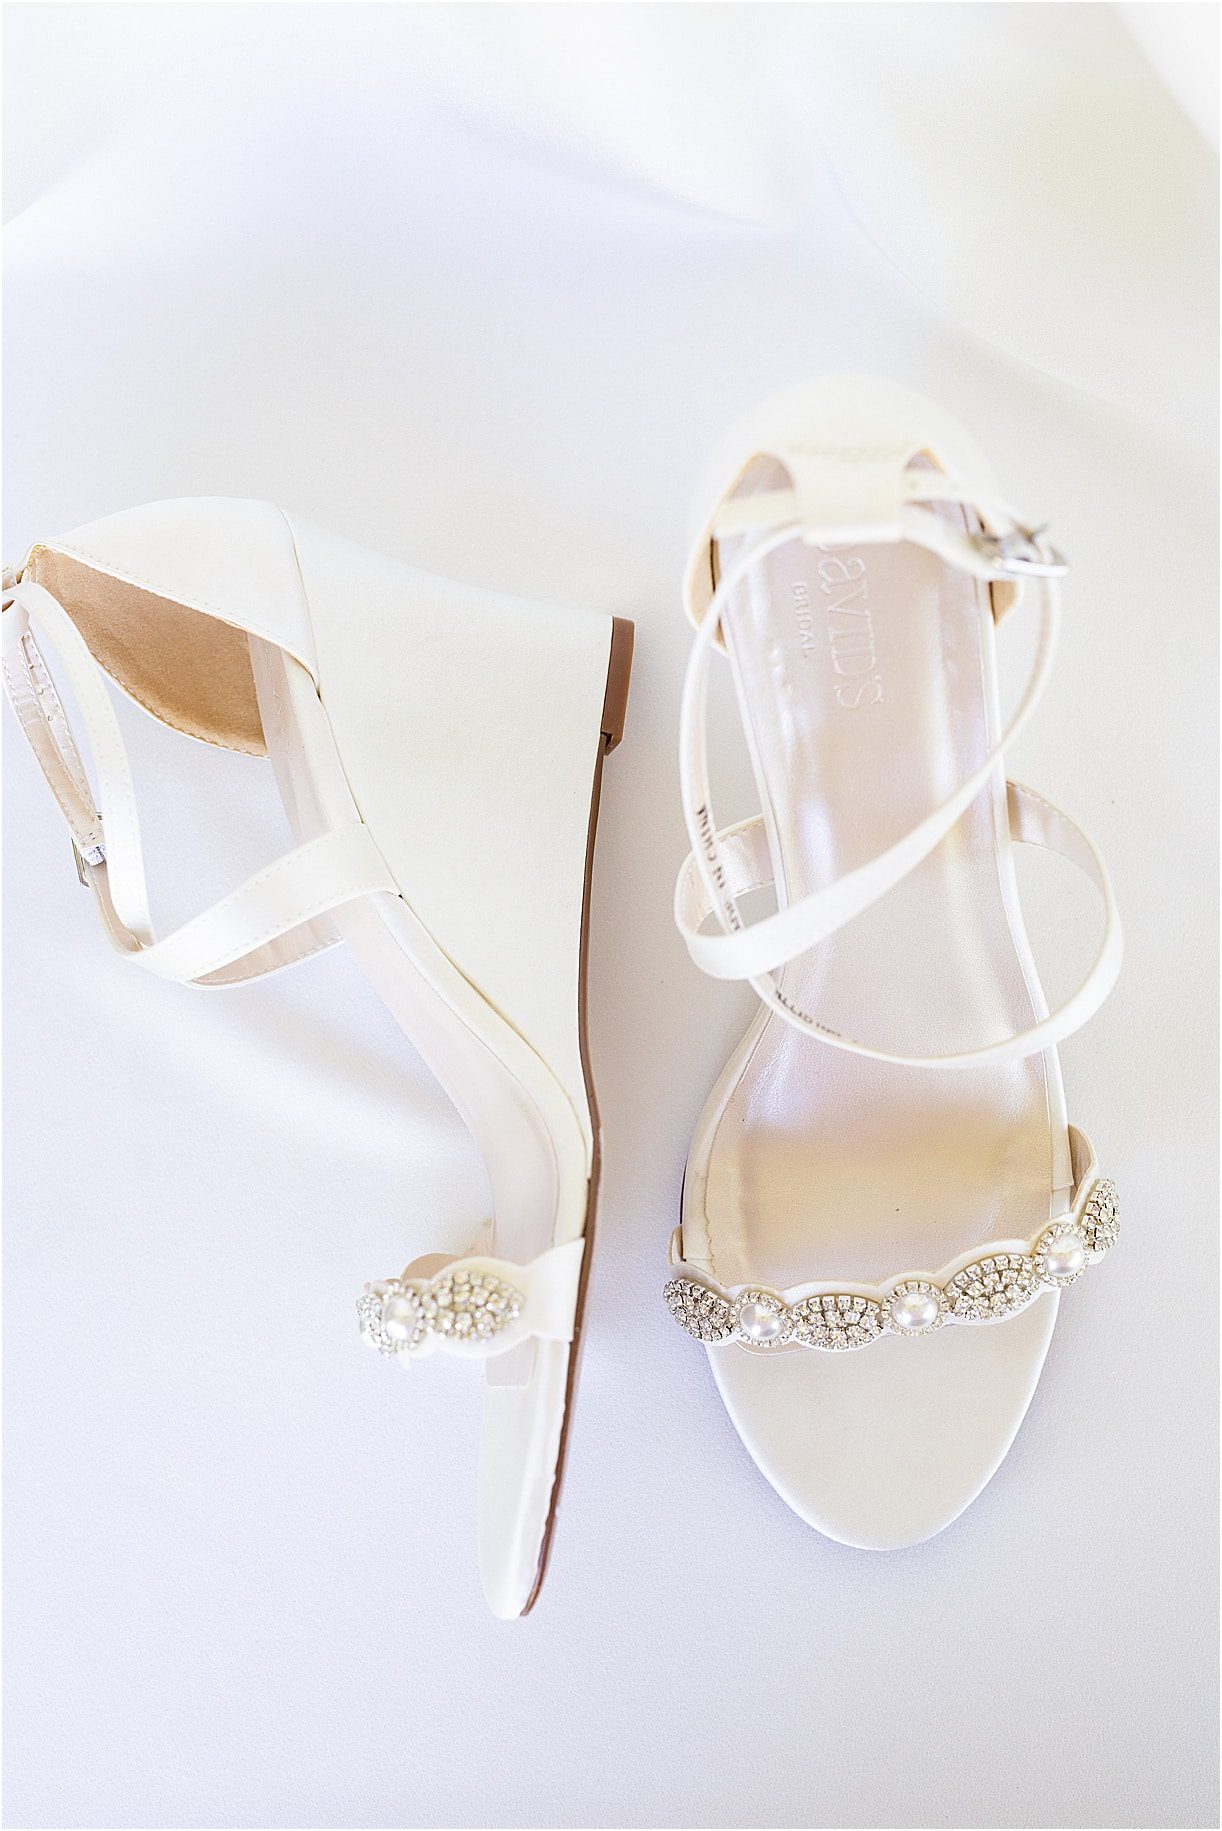 Small Wedding Ideas Home Wedding Decorations | Hill City Bride Virginia Weddings Bridal Shoes